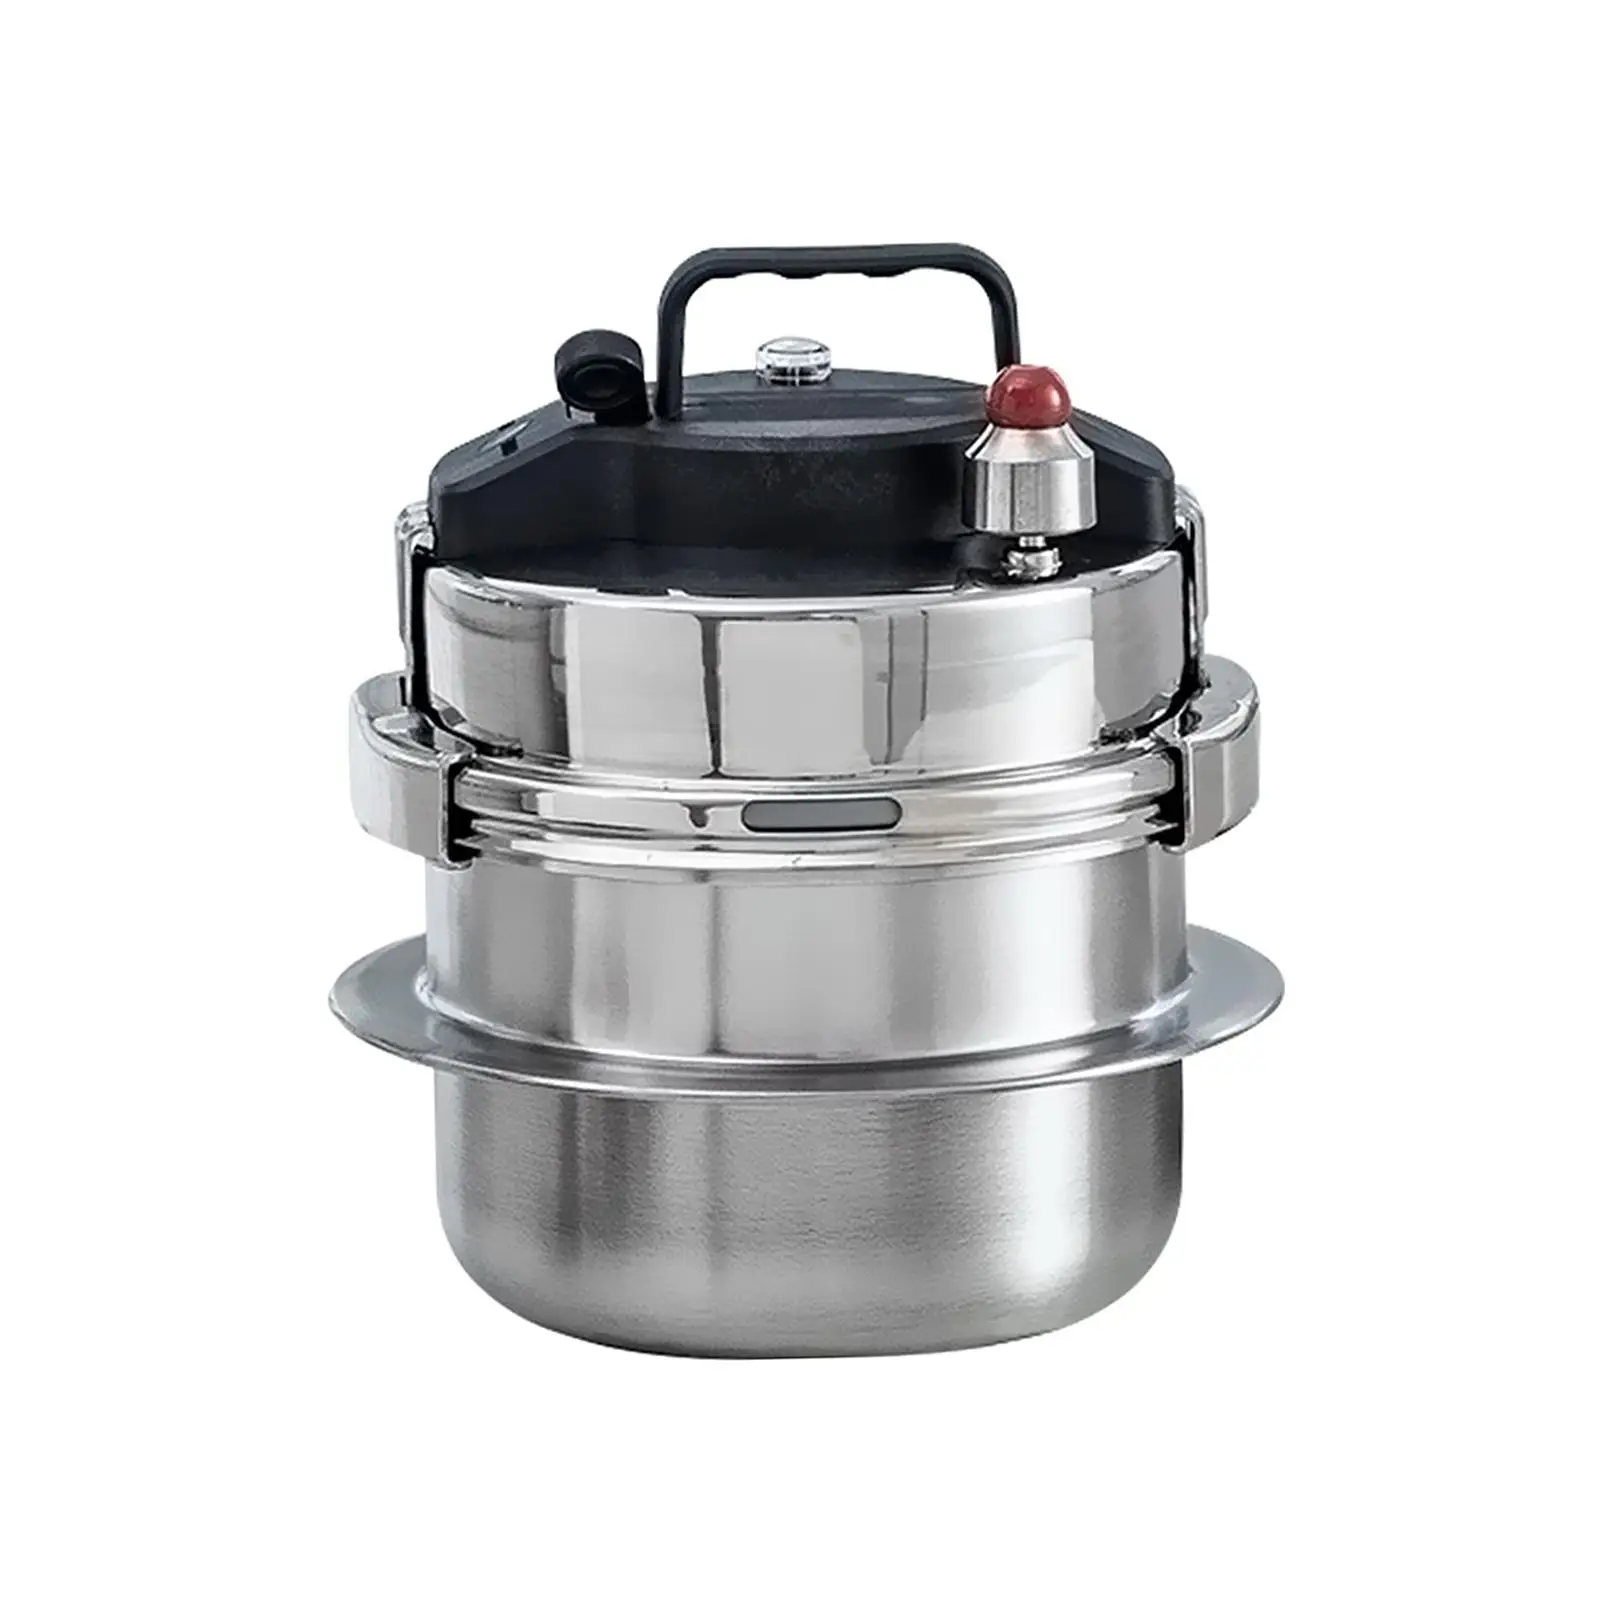 https://ae01.alicdn.com/kf/S0d13a5ece882476fa440e59900fe3c47s/2L-Gas-Induction-Cooker-Universal-Mini-Stainless-Steel-Pressure-Cooker-Pot-Household-Mini-Pressure-Cooker-5.jpg